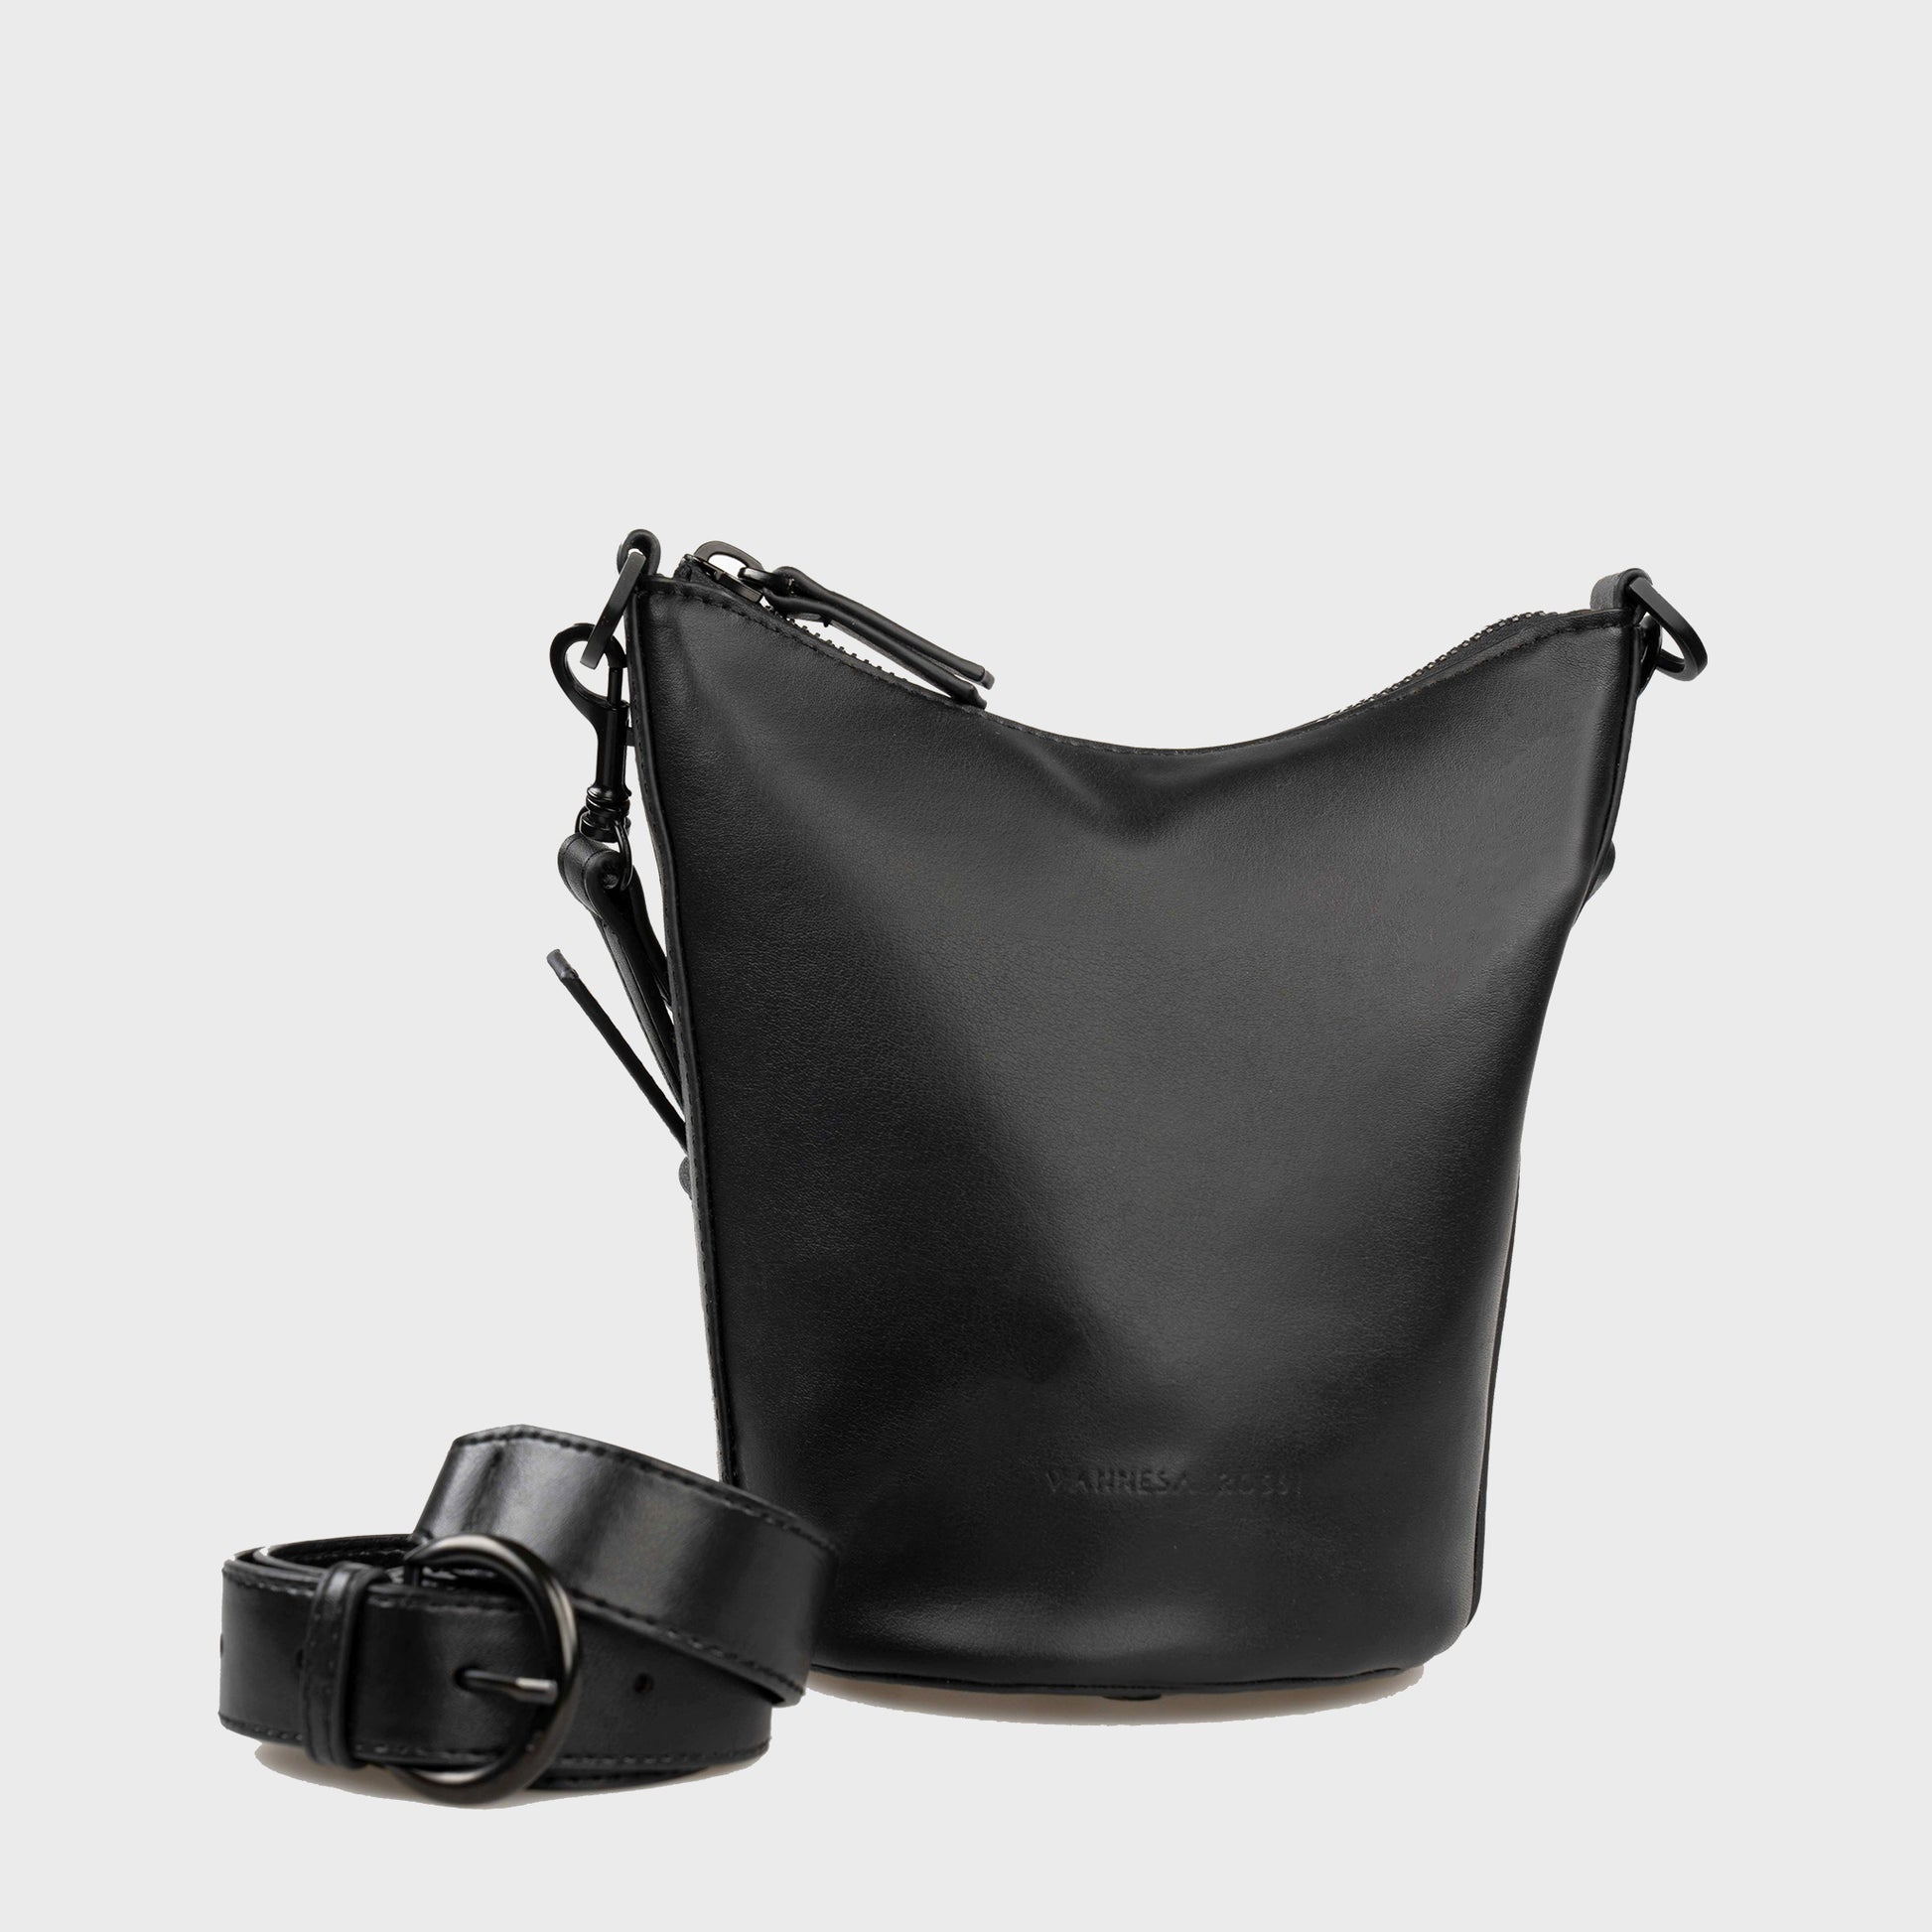 Special Ross Black Cross-Body Bag